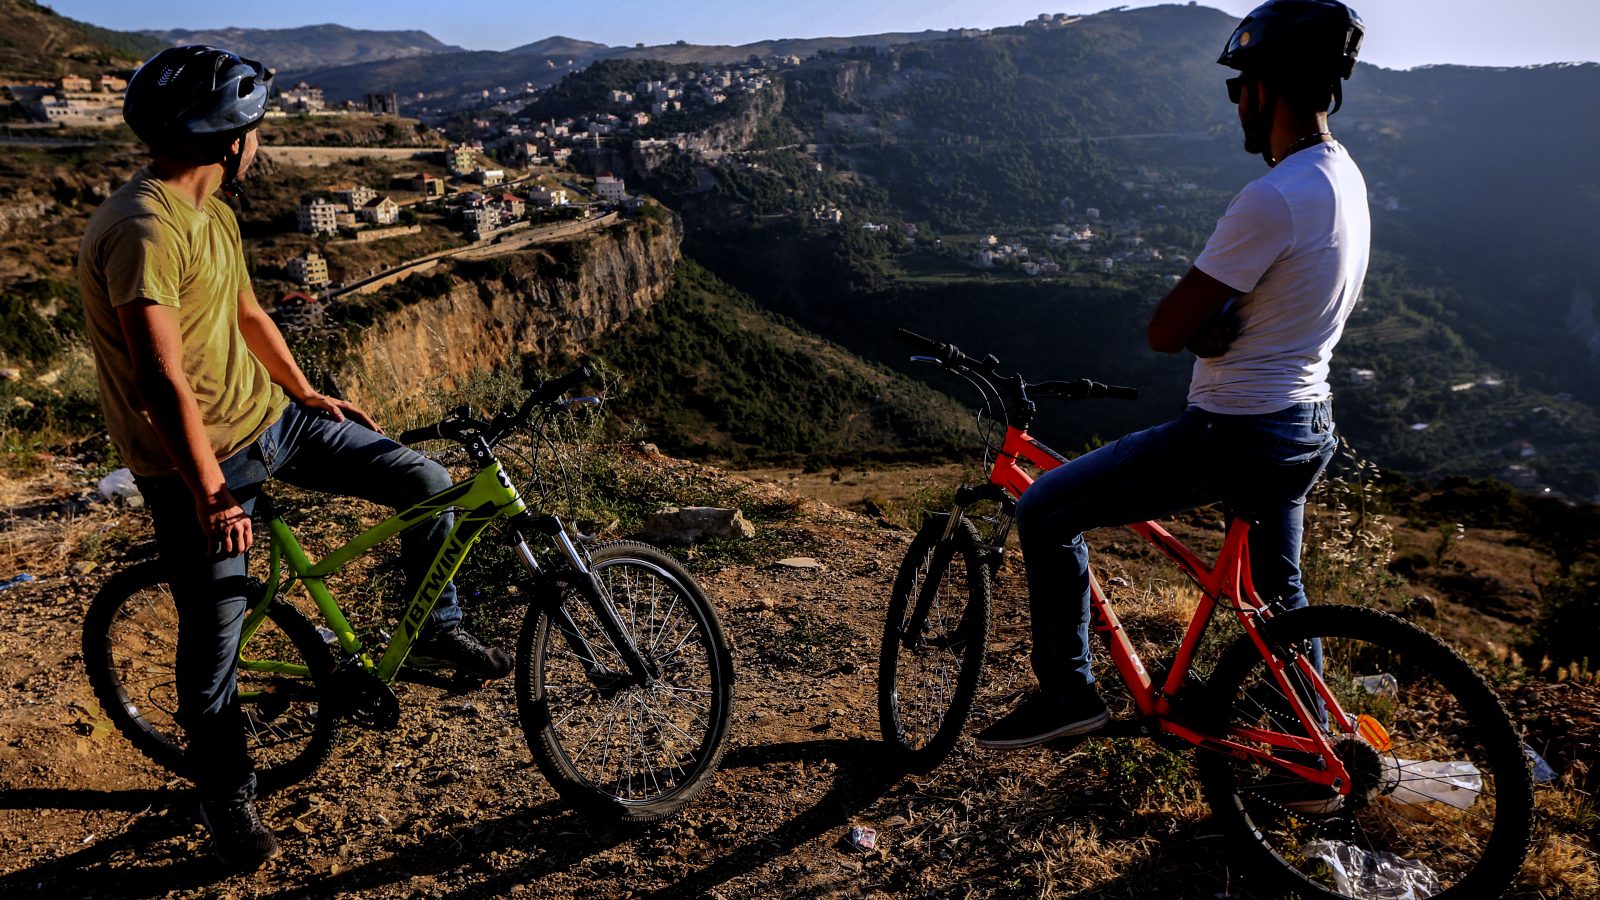 Biking in beautiful Jezzine, Lebanon